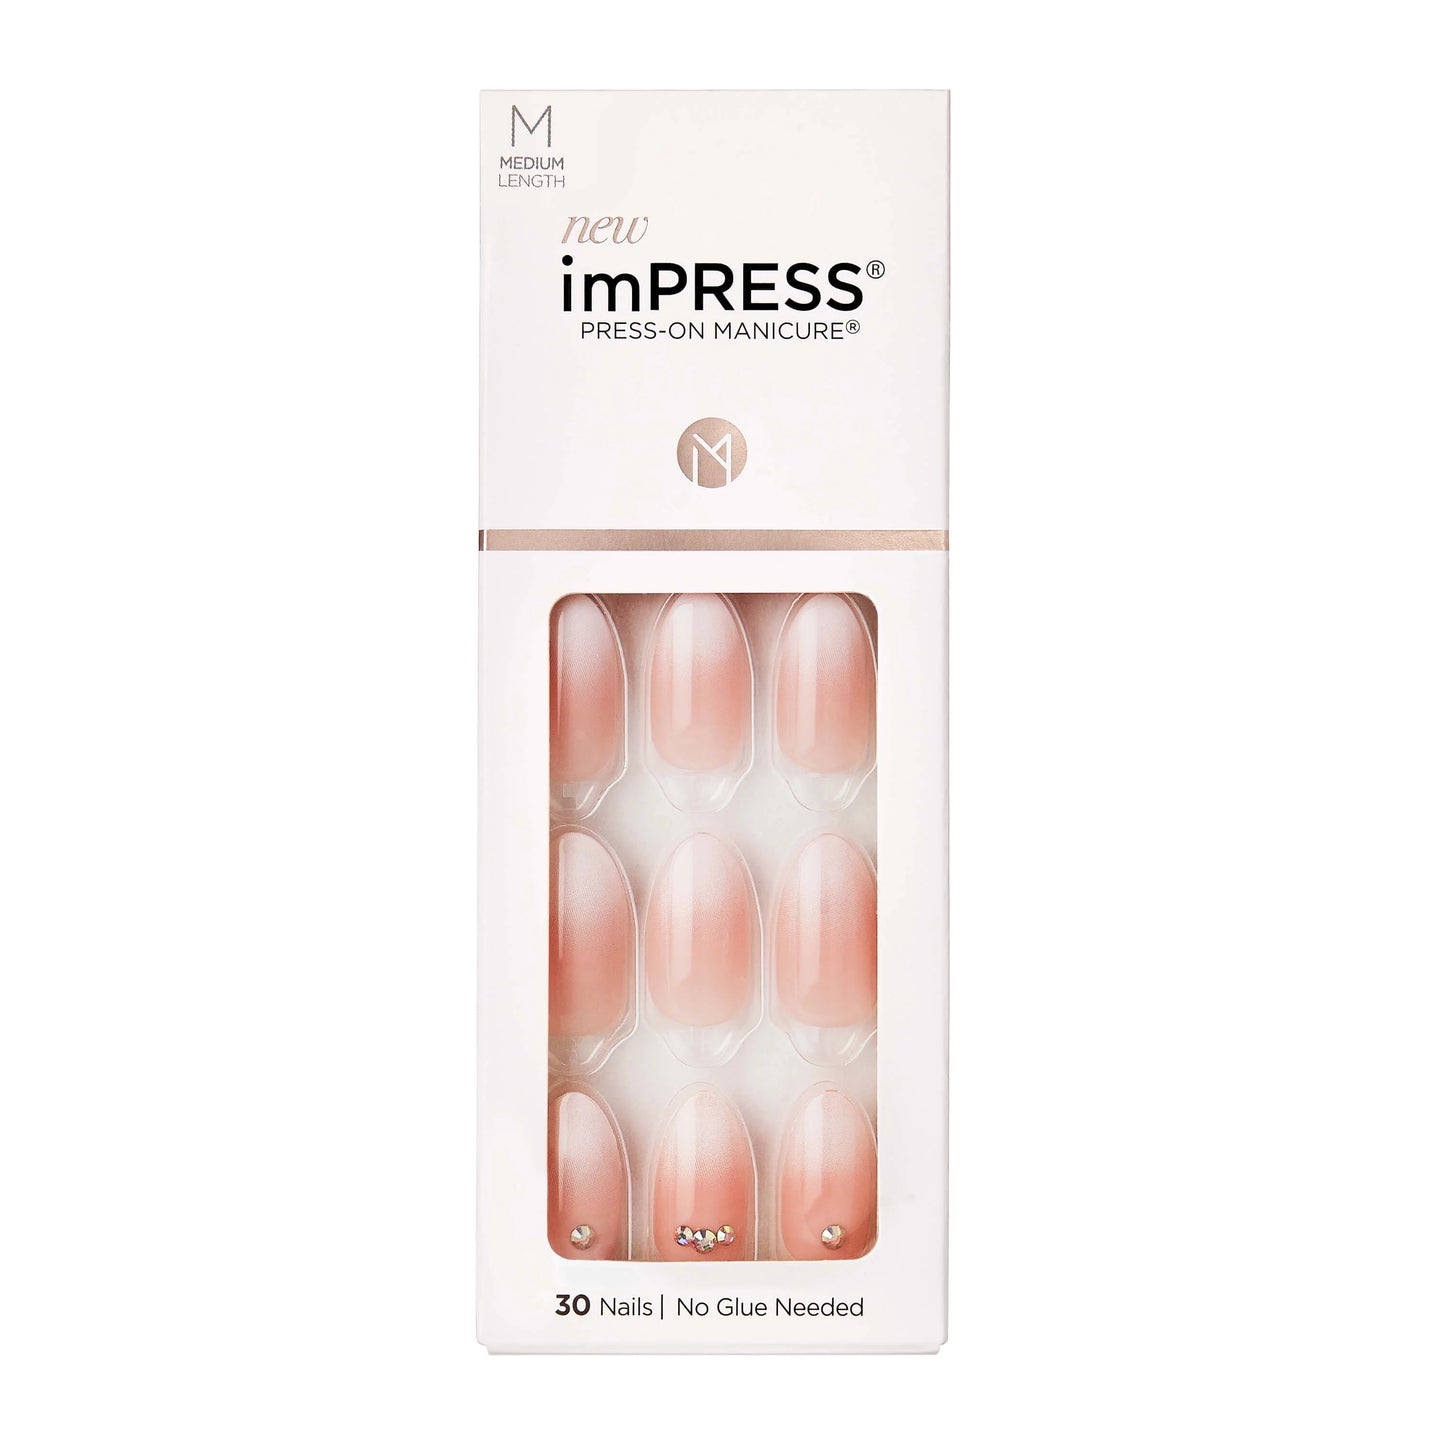 KISS ImPRESS Press-On Manicure - KIMM01C Awestruck - Taille M